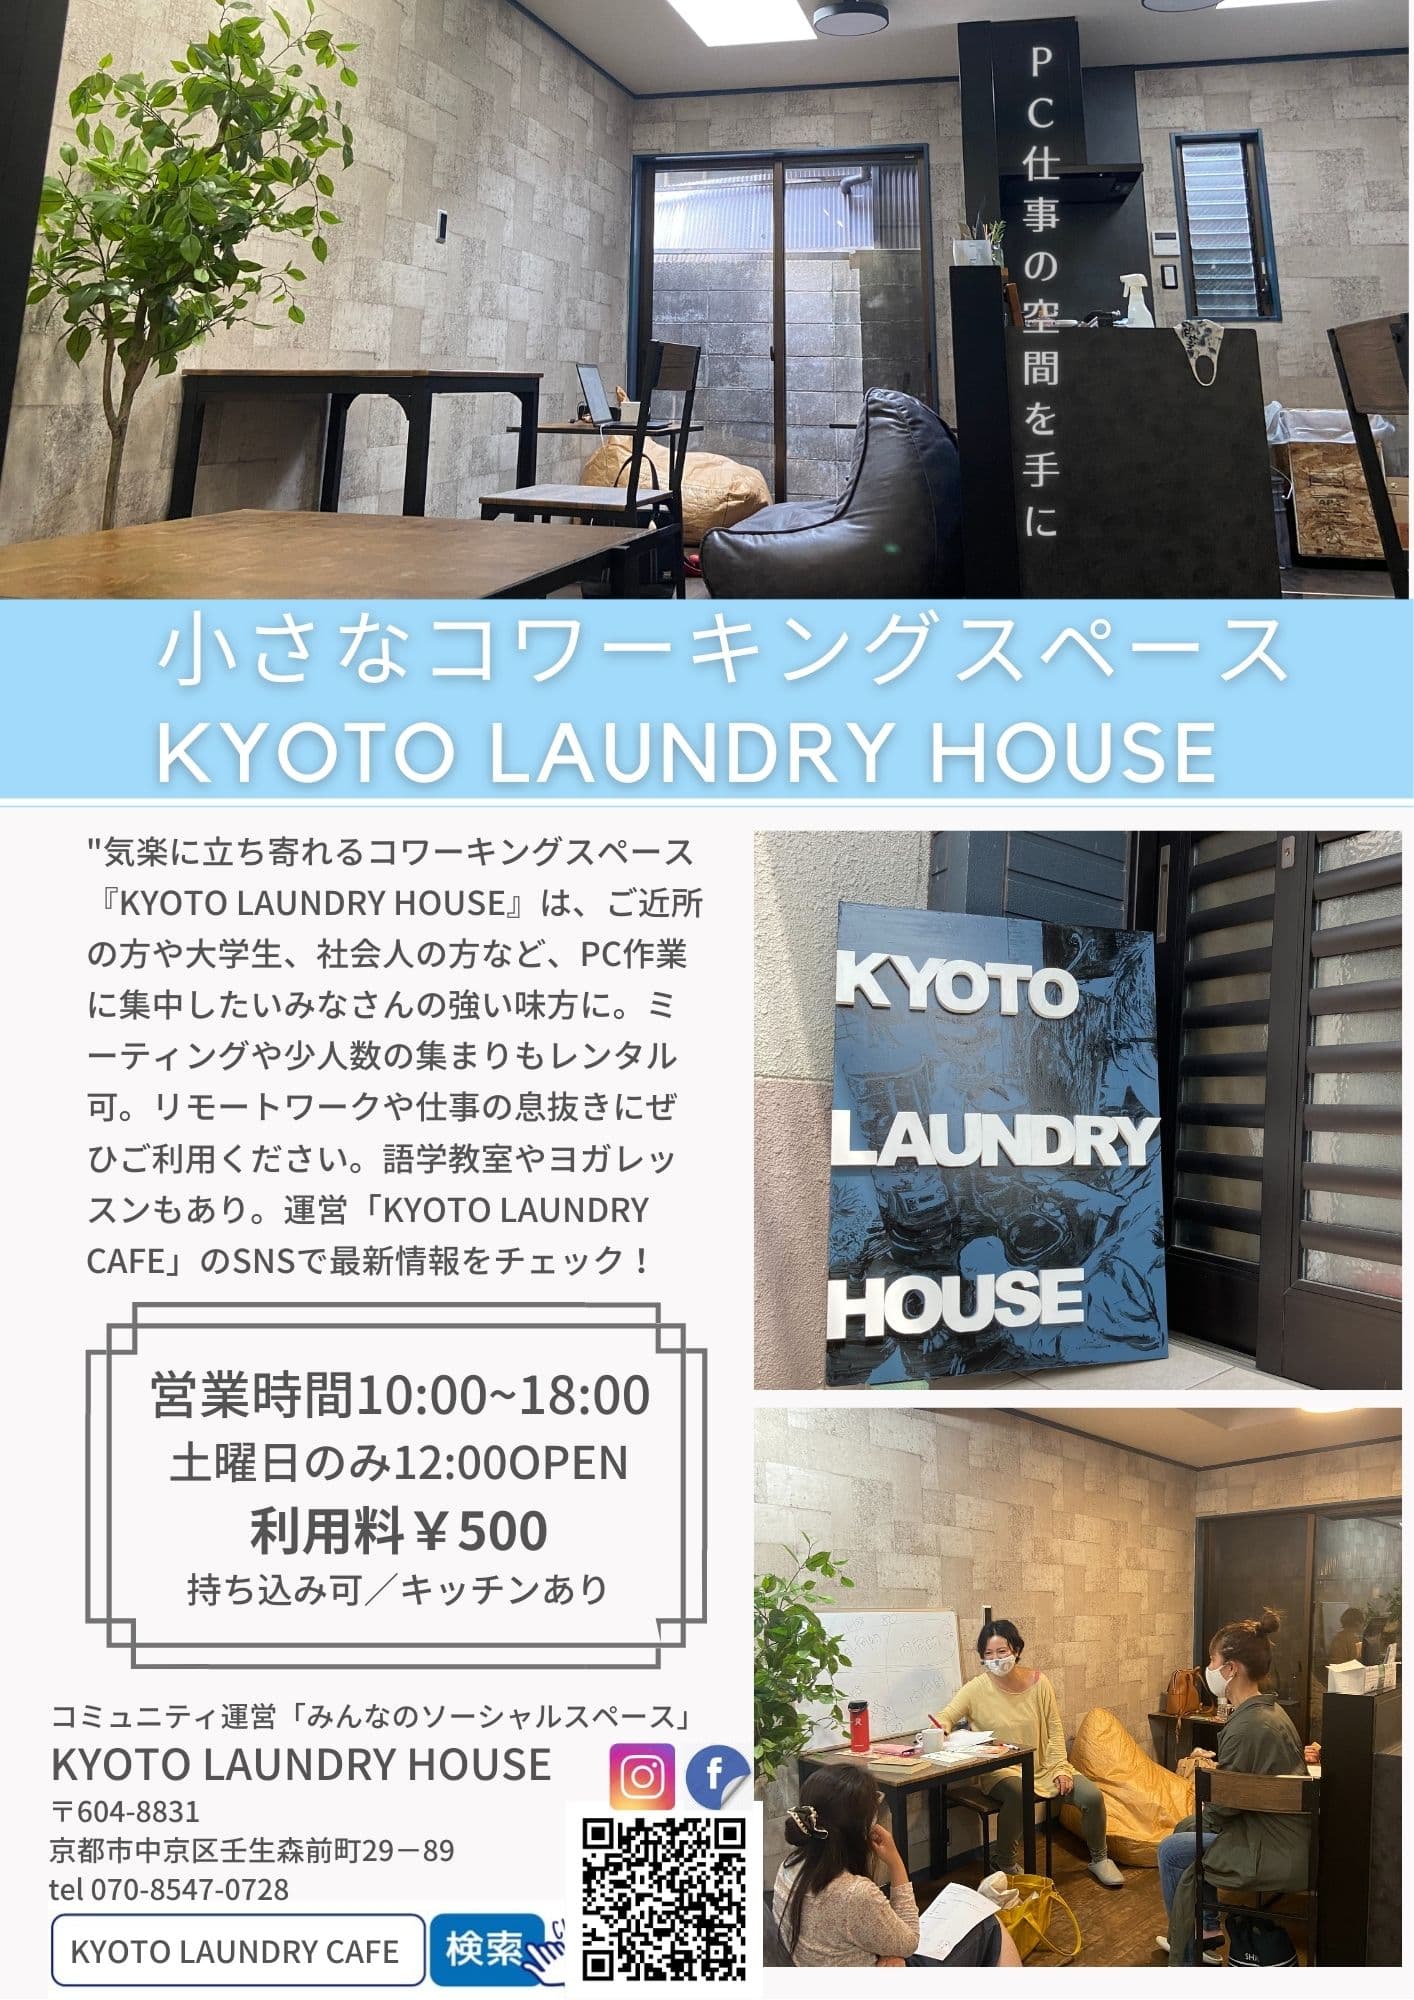 KYOTO LAUNDRY HOUSE イメージ